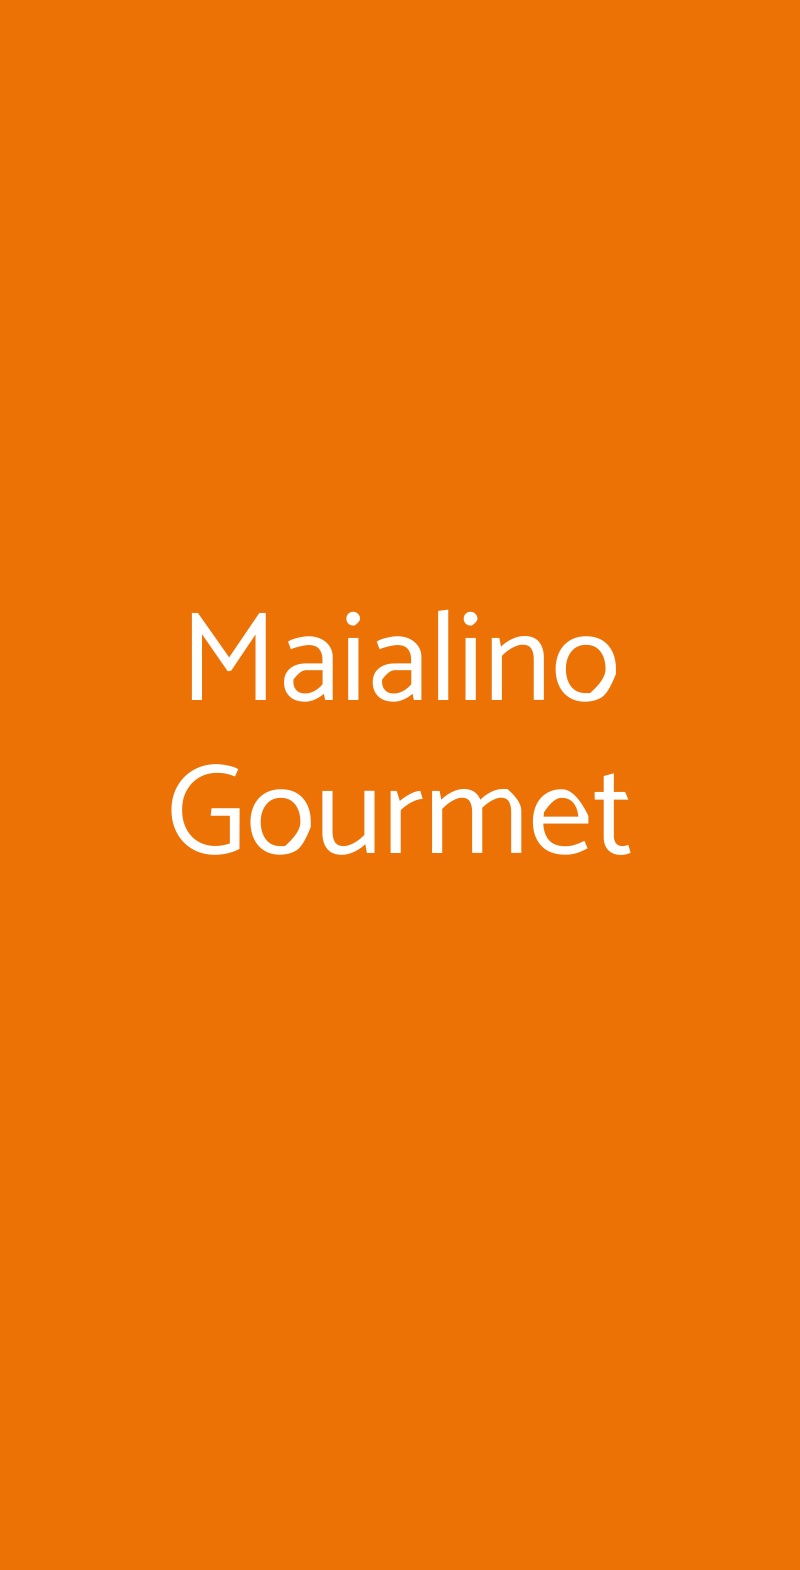 Maialino Gourmet Torino menù 1 pagina